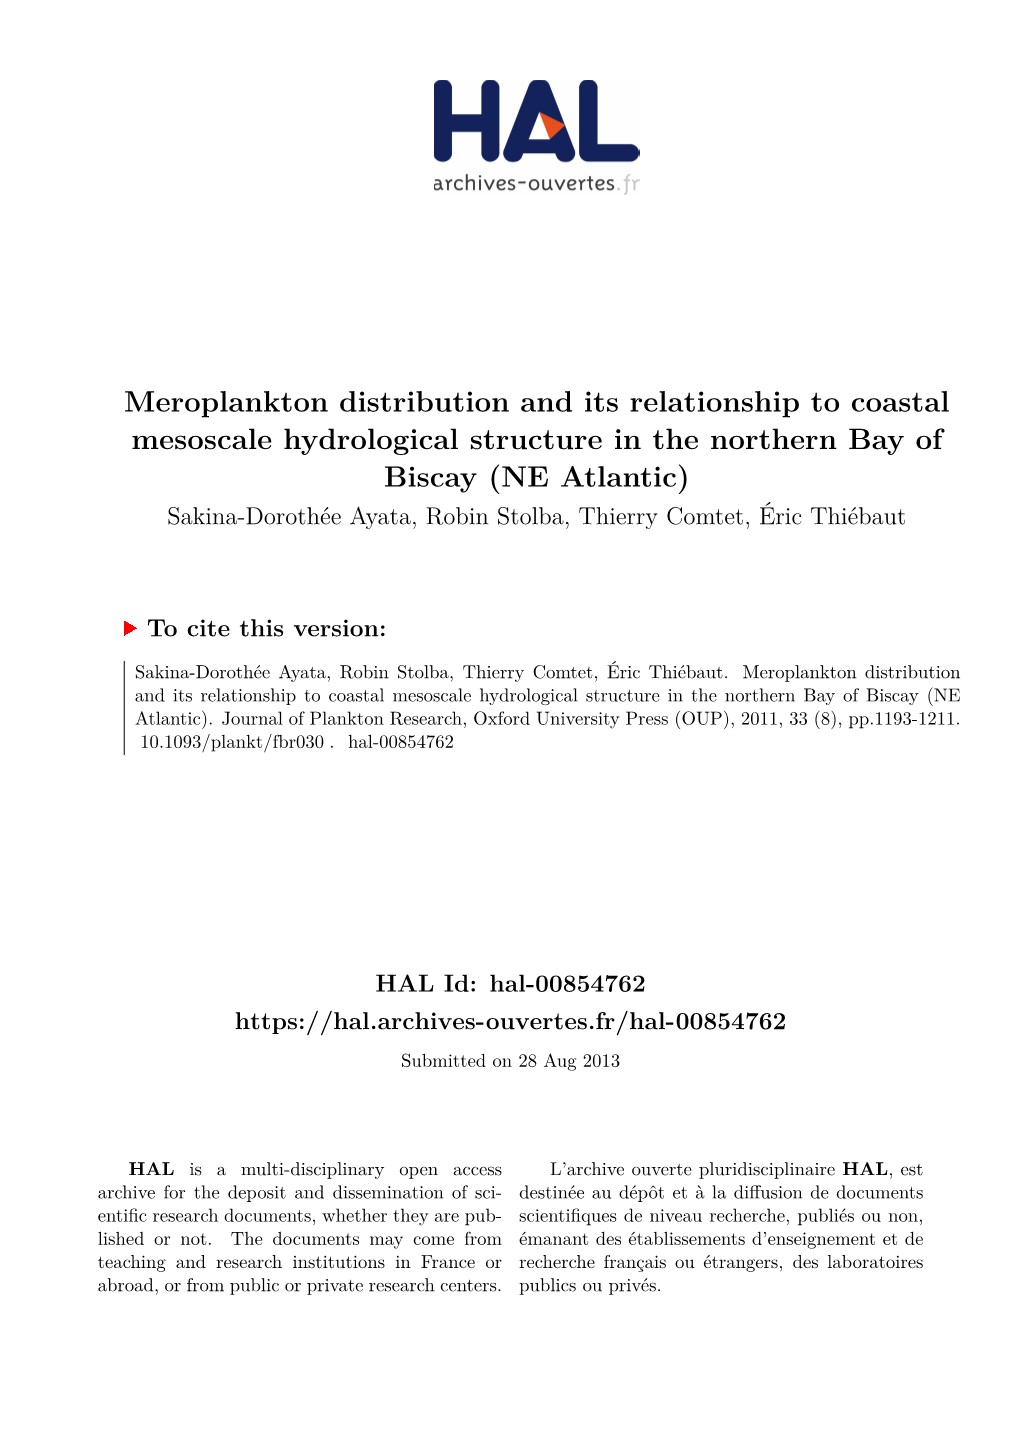 Meroplankton Distribution and Its Relationship